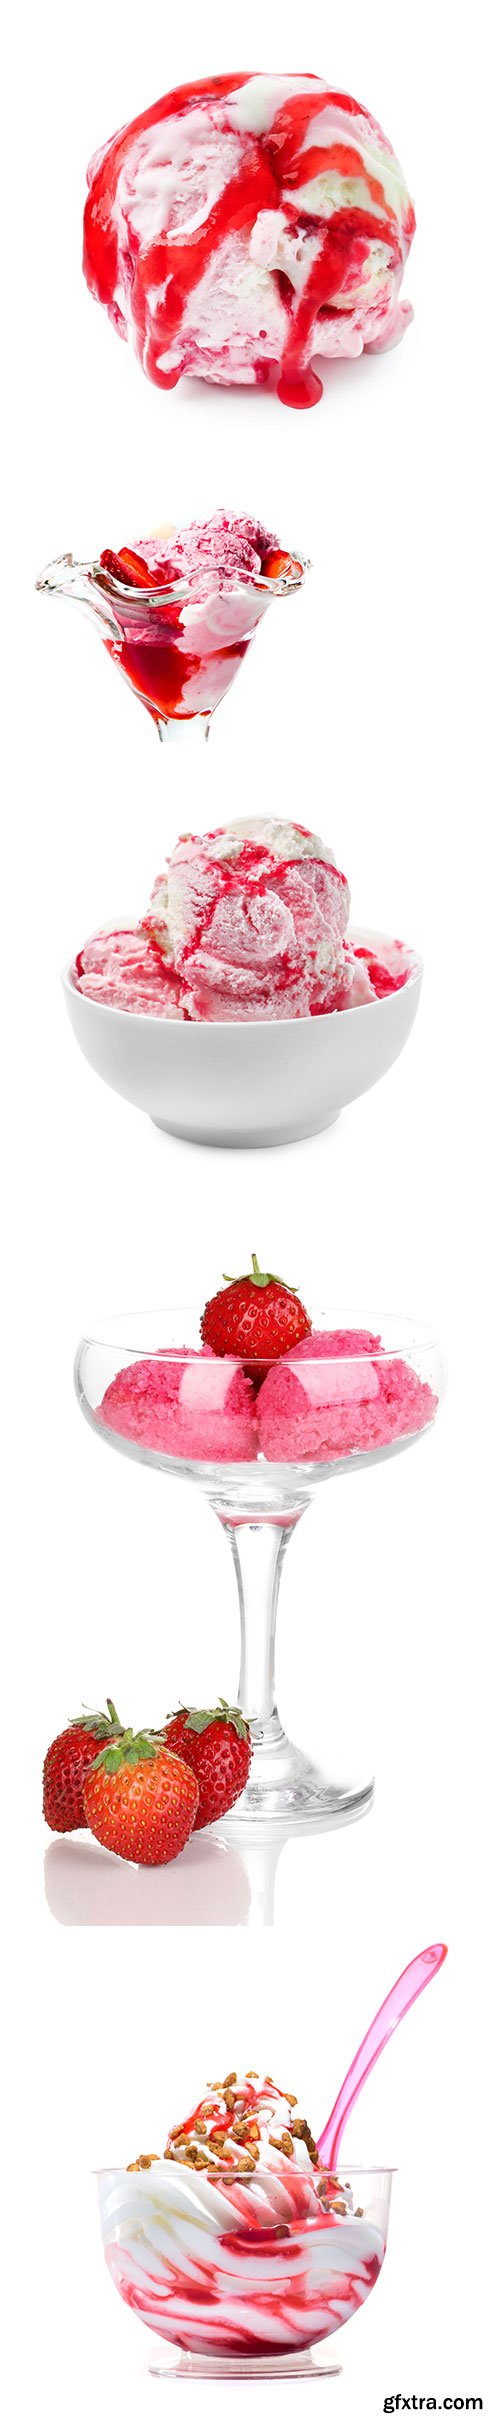 Photo - Tasty Raspberry Ice Cream Isolated - 5xJPGs